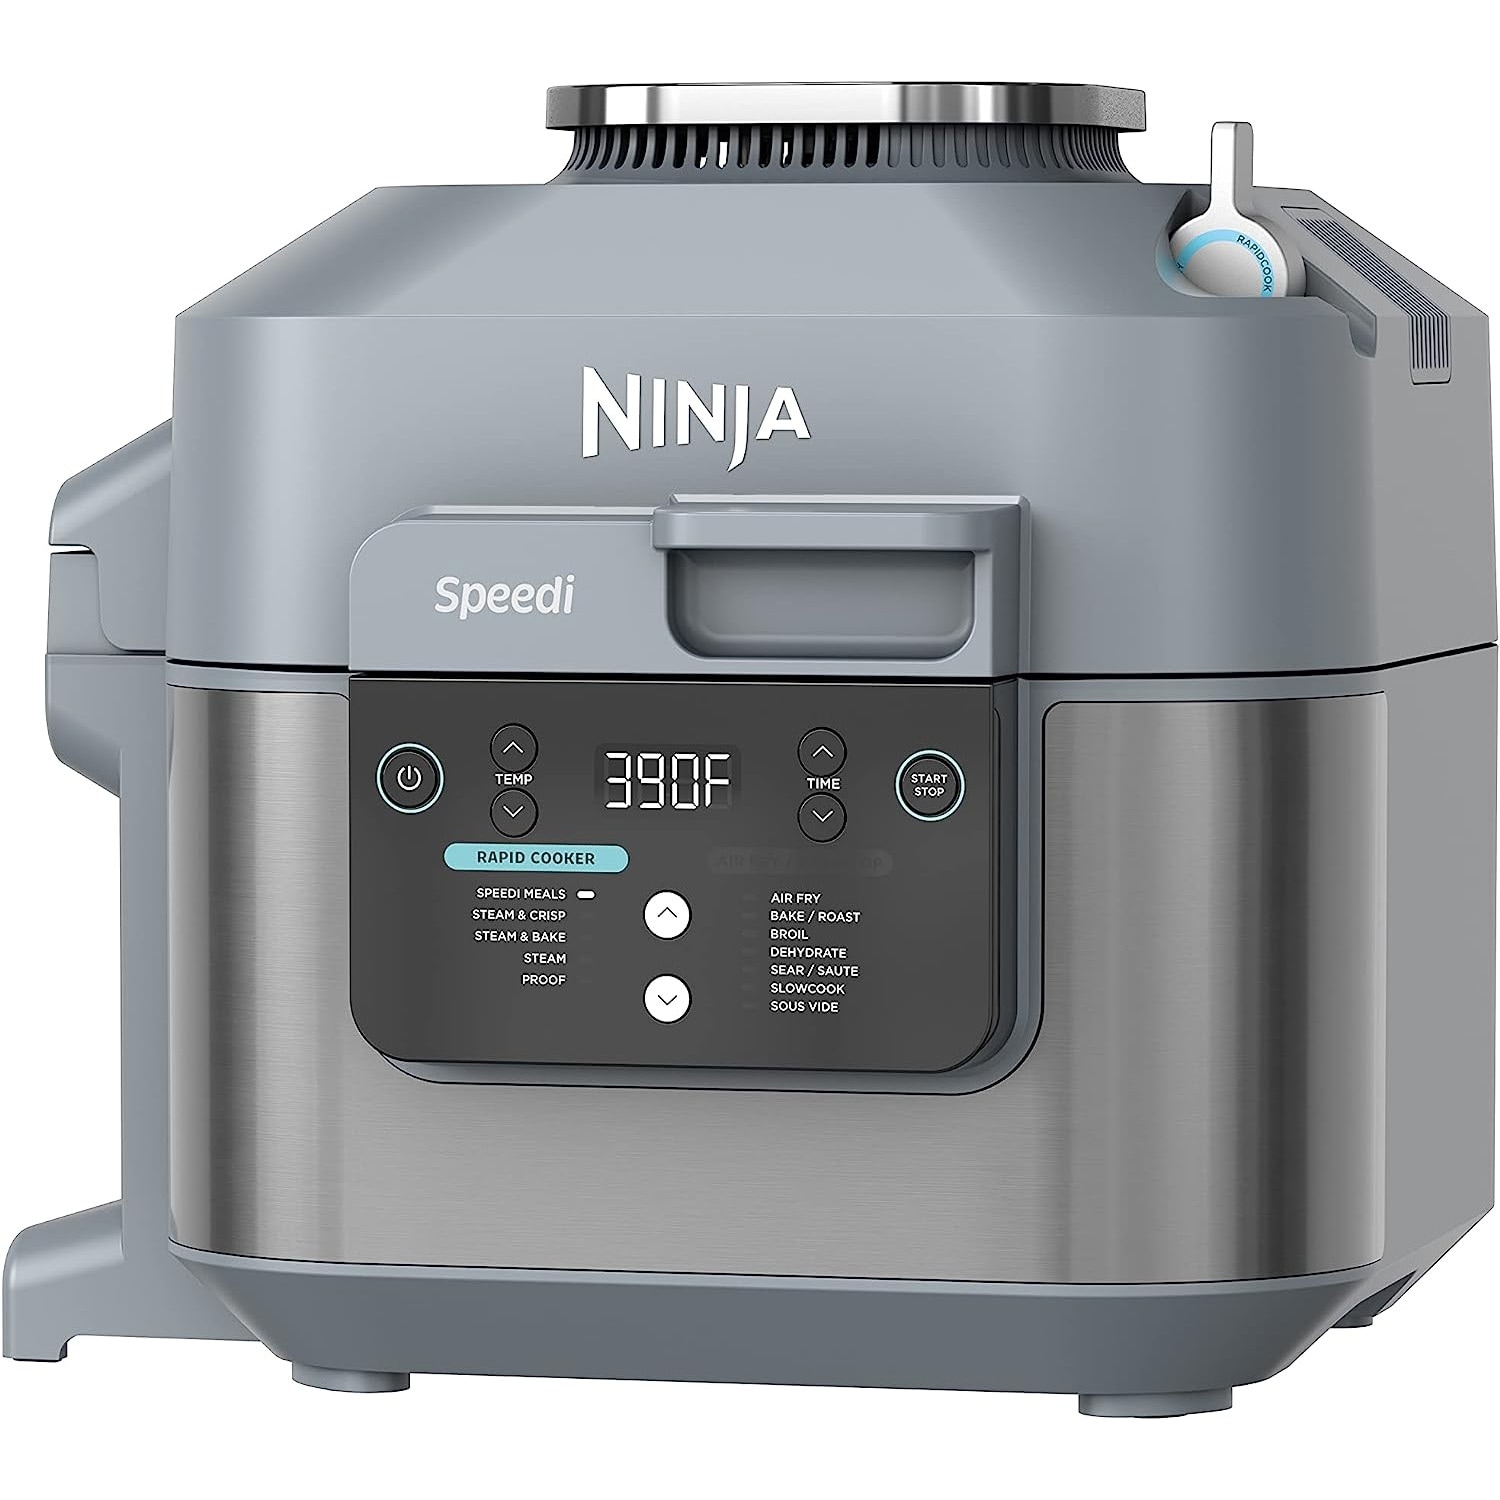 Ninja Foodi 8 qt. 12 in 1 Deluxe XL Pressure Cooker Air Fryer 1760